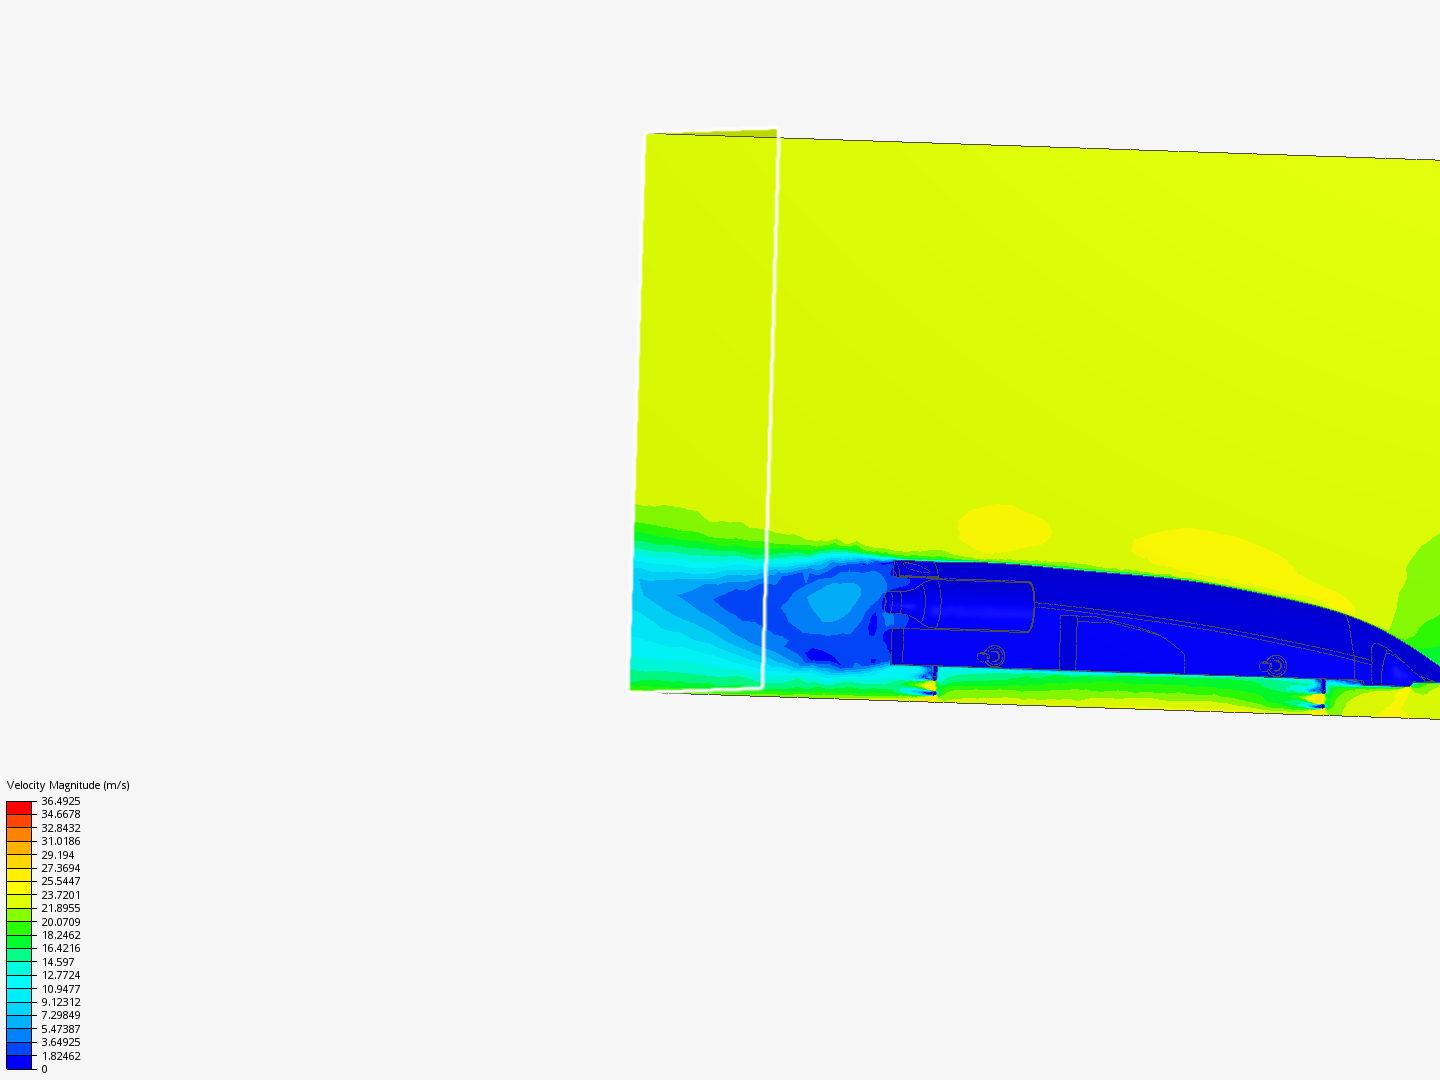 F1 Wind Tunnel Simulation image